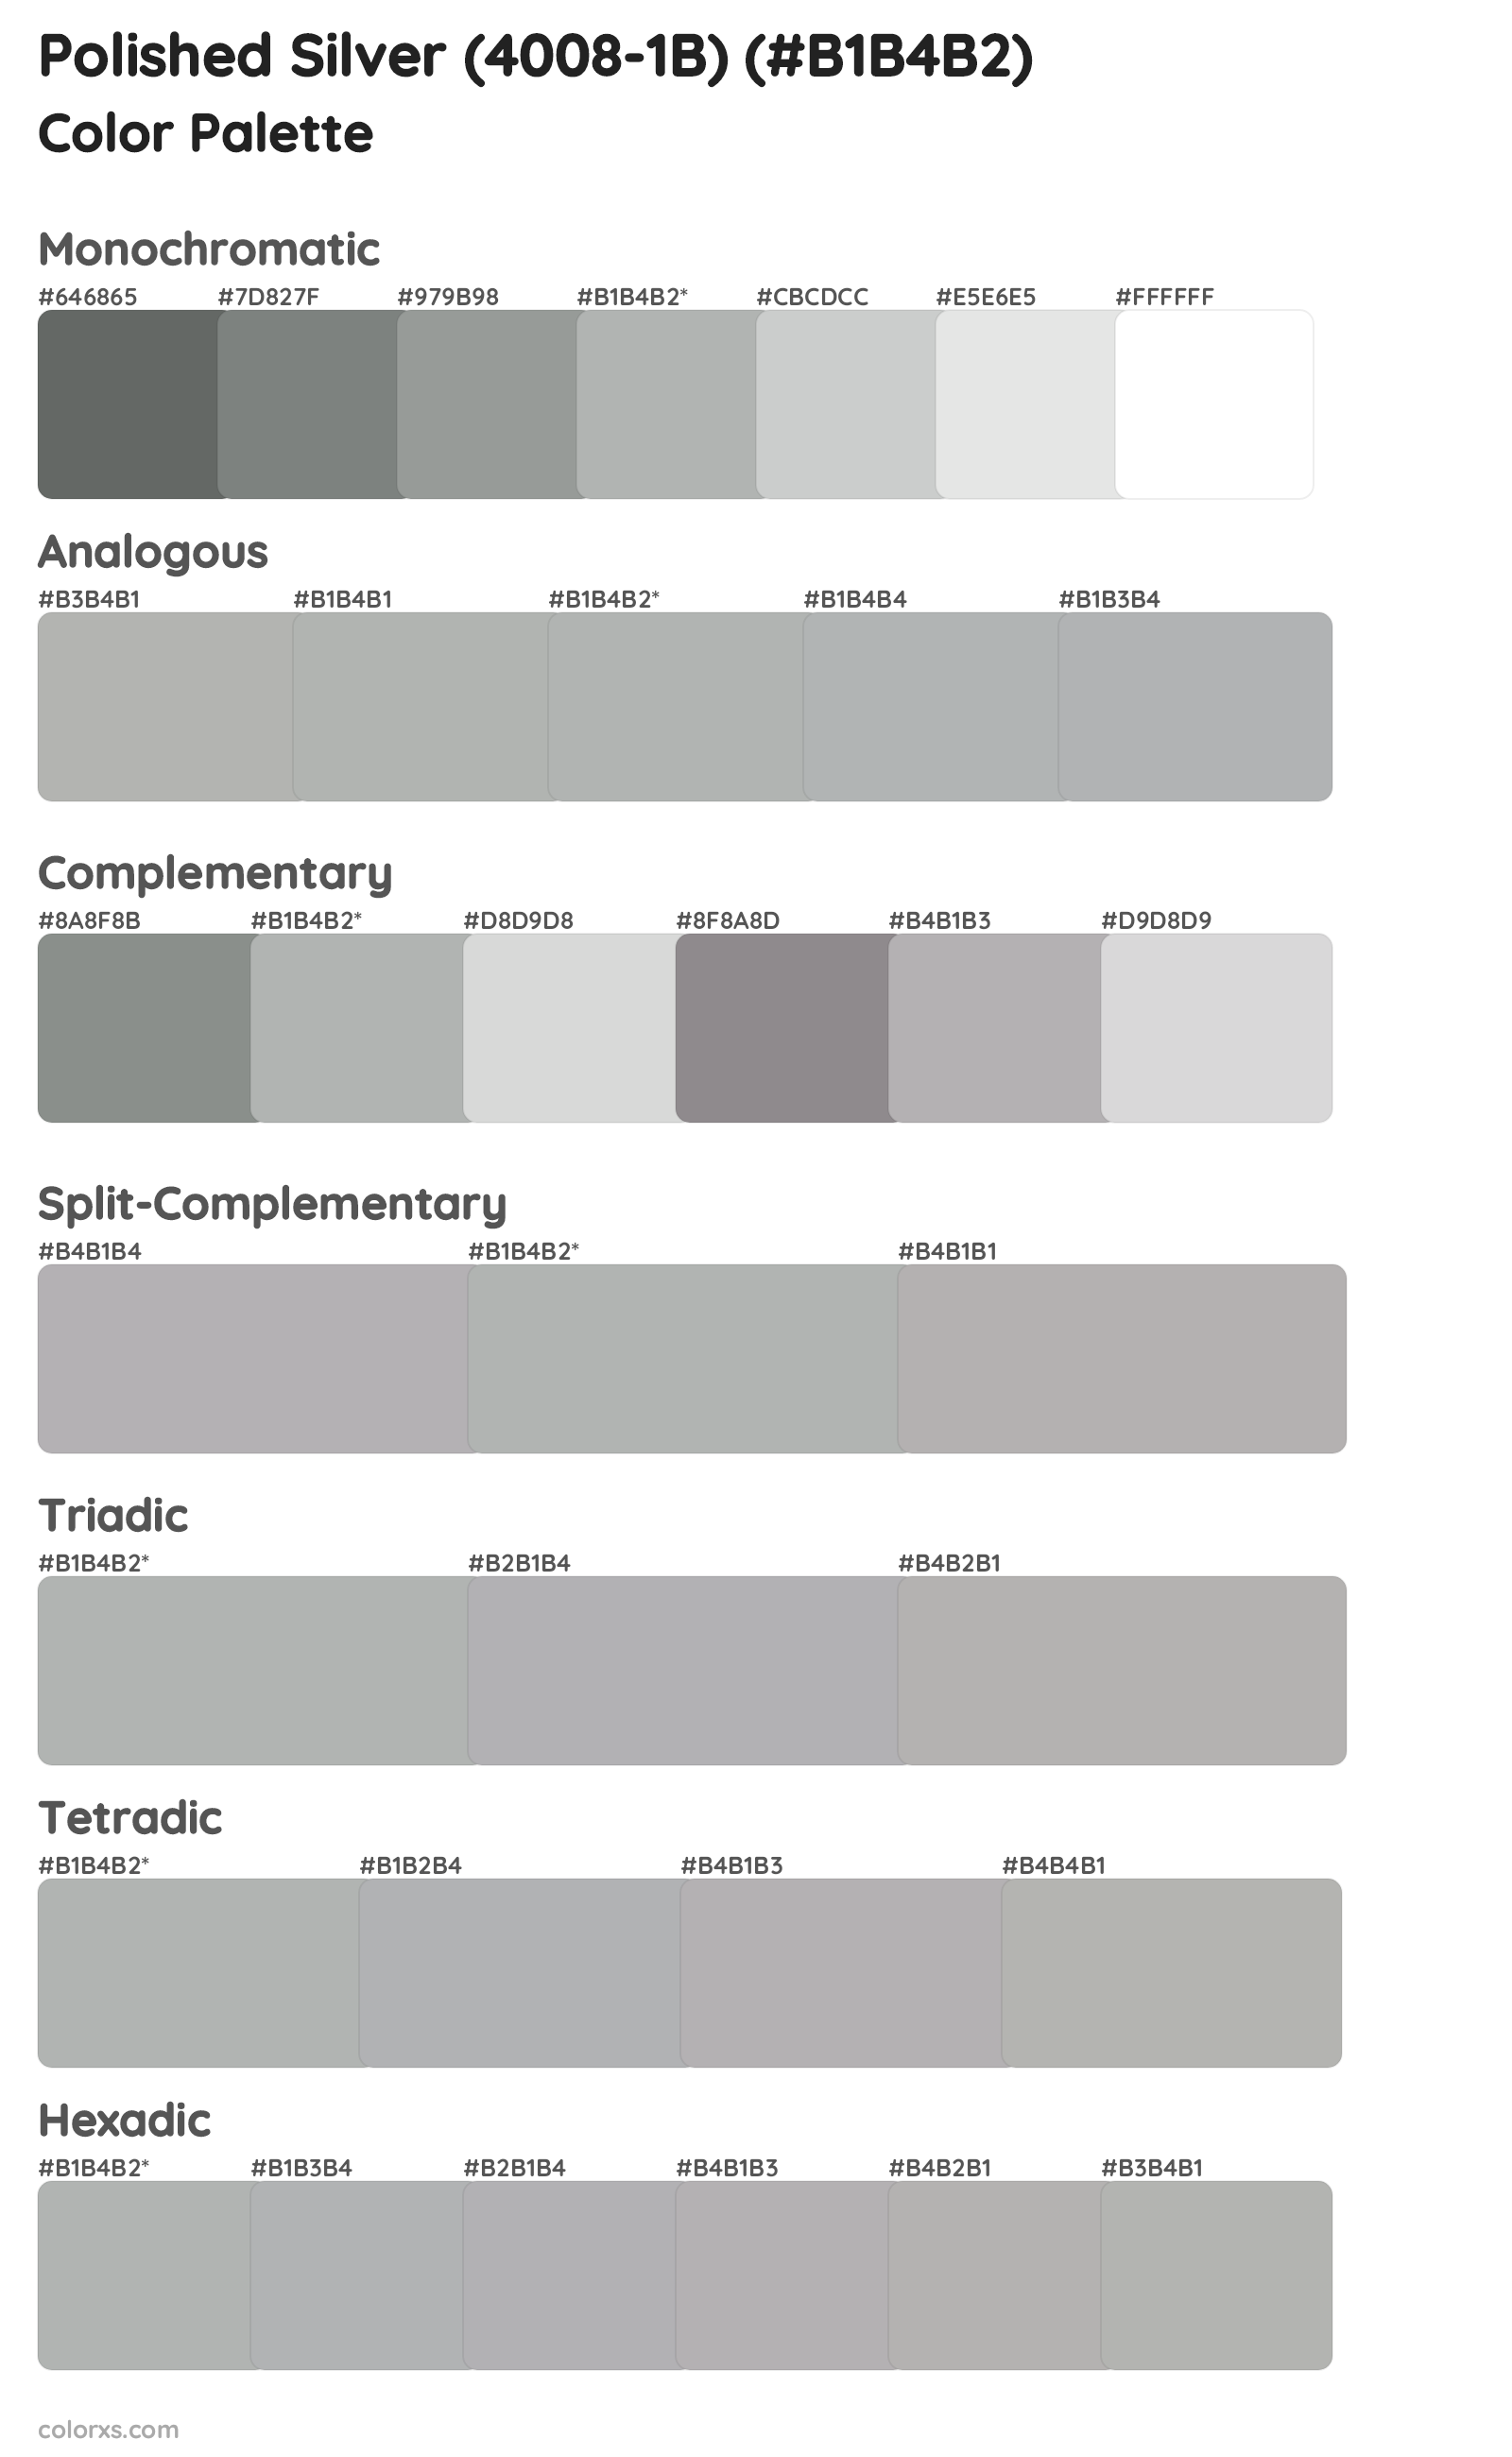 Polished Silver (4008-1B) Color Scheme Palettes